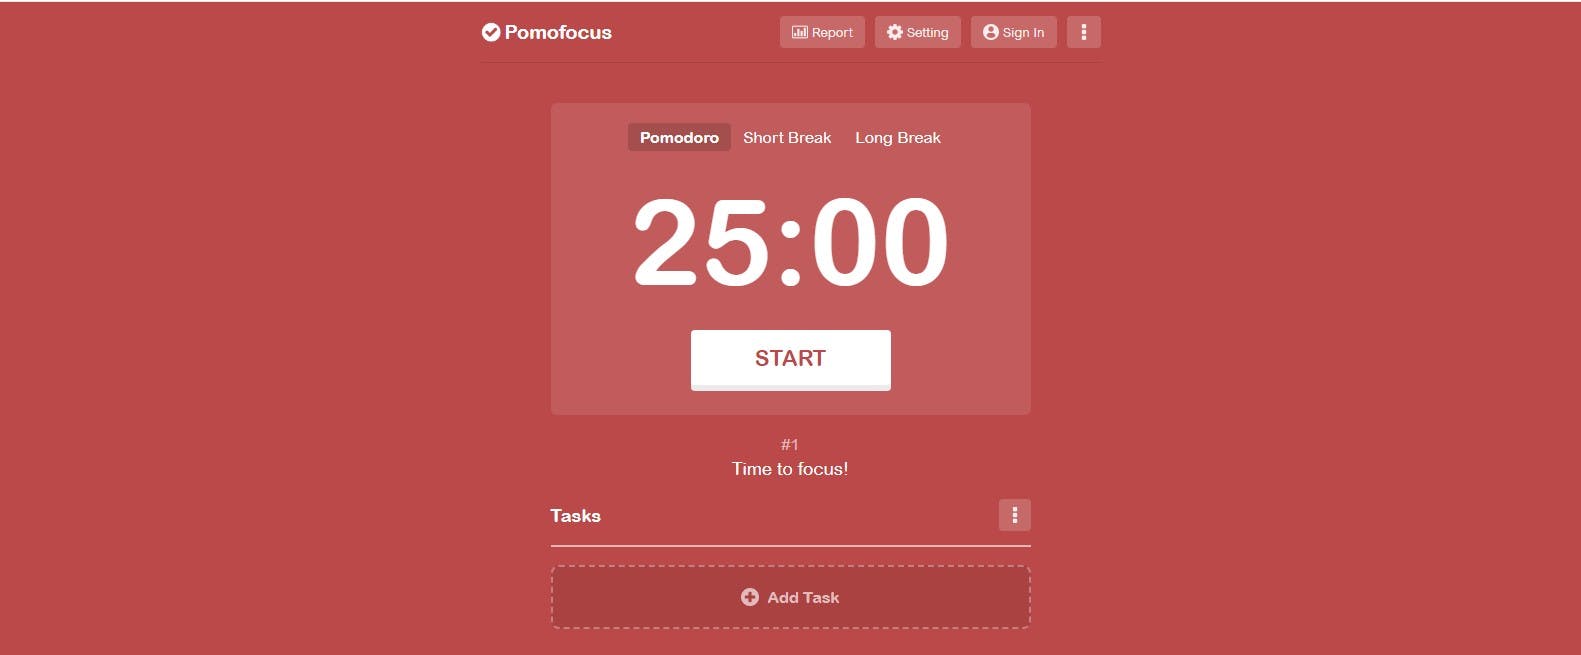 Pomofocus.io - Quick Pomodoro timer website for seamless productivity